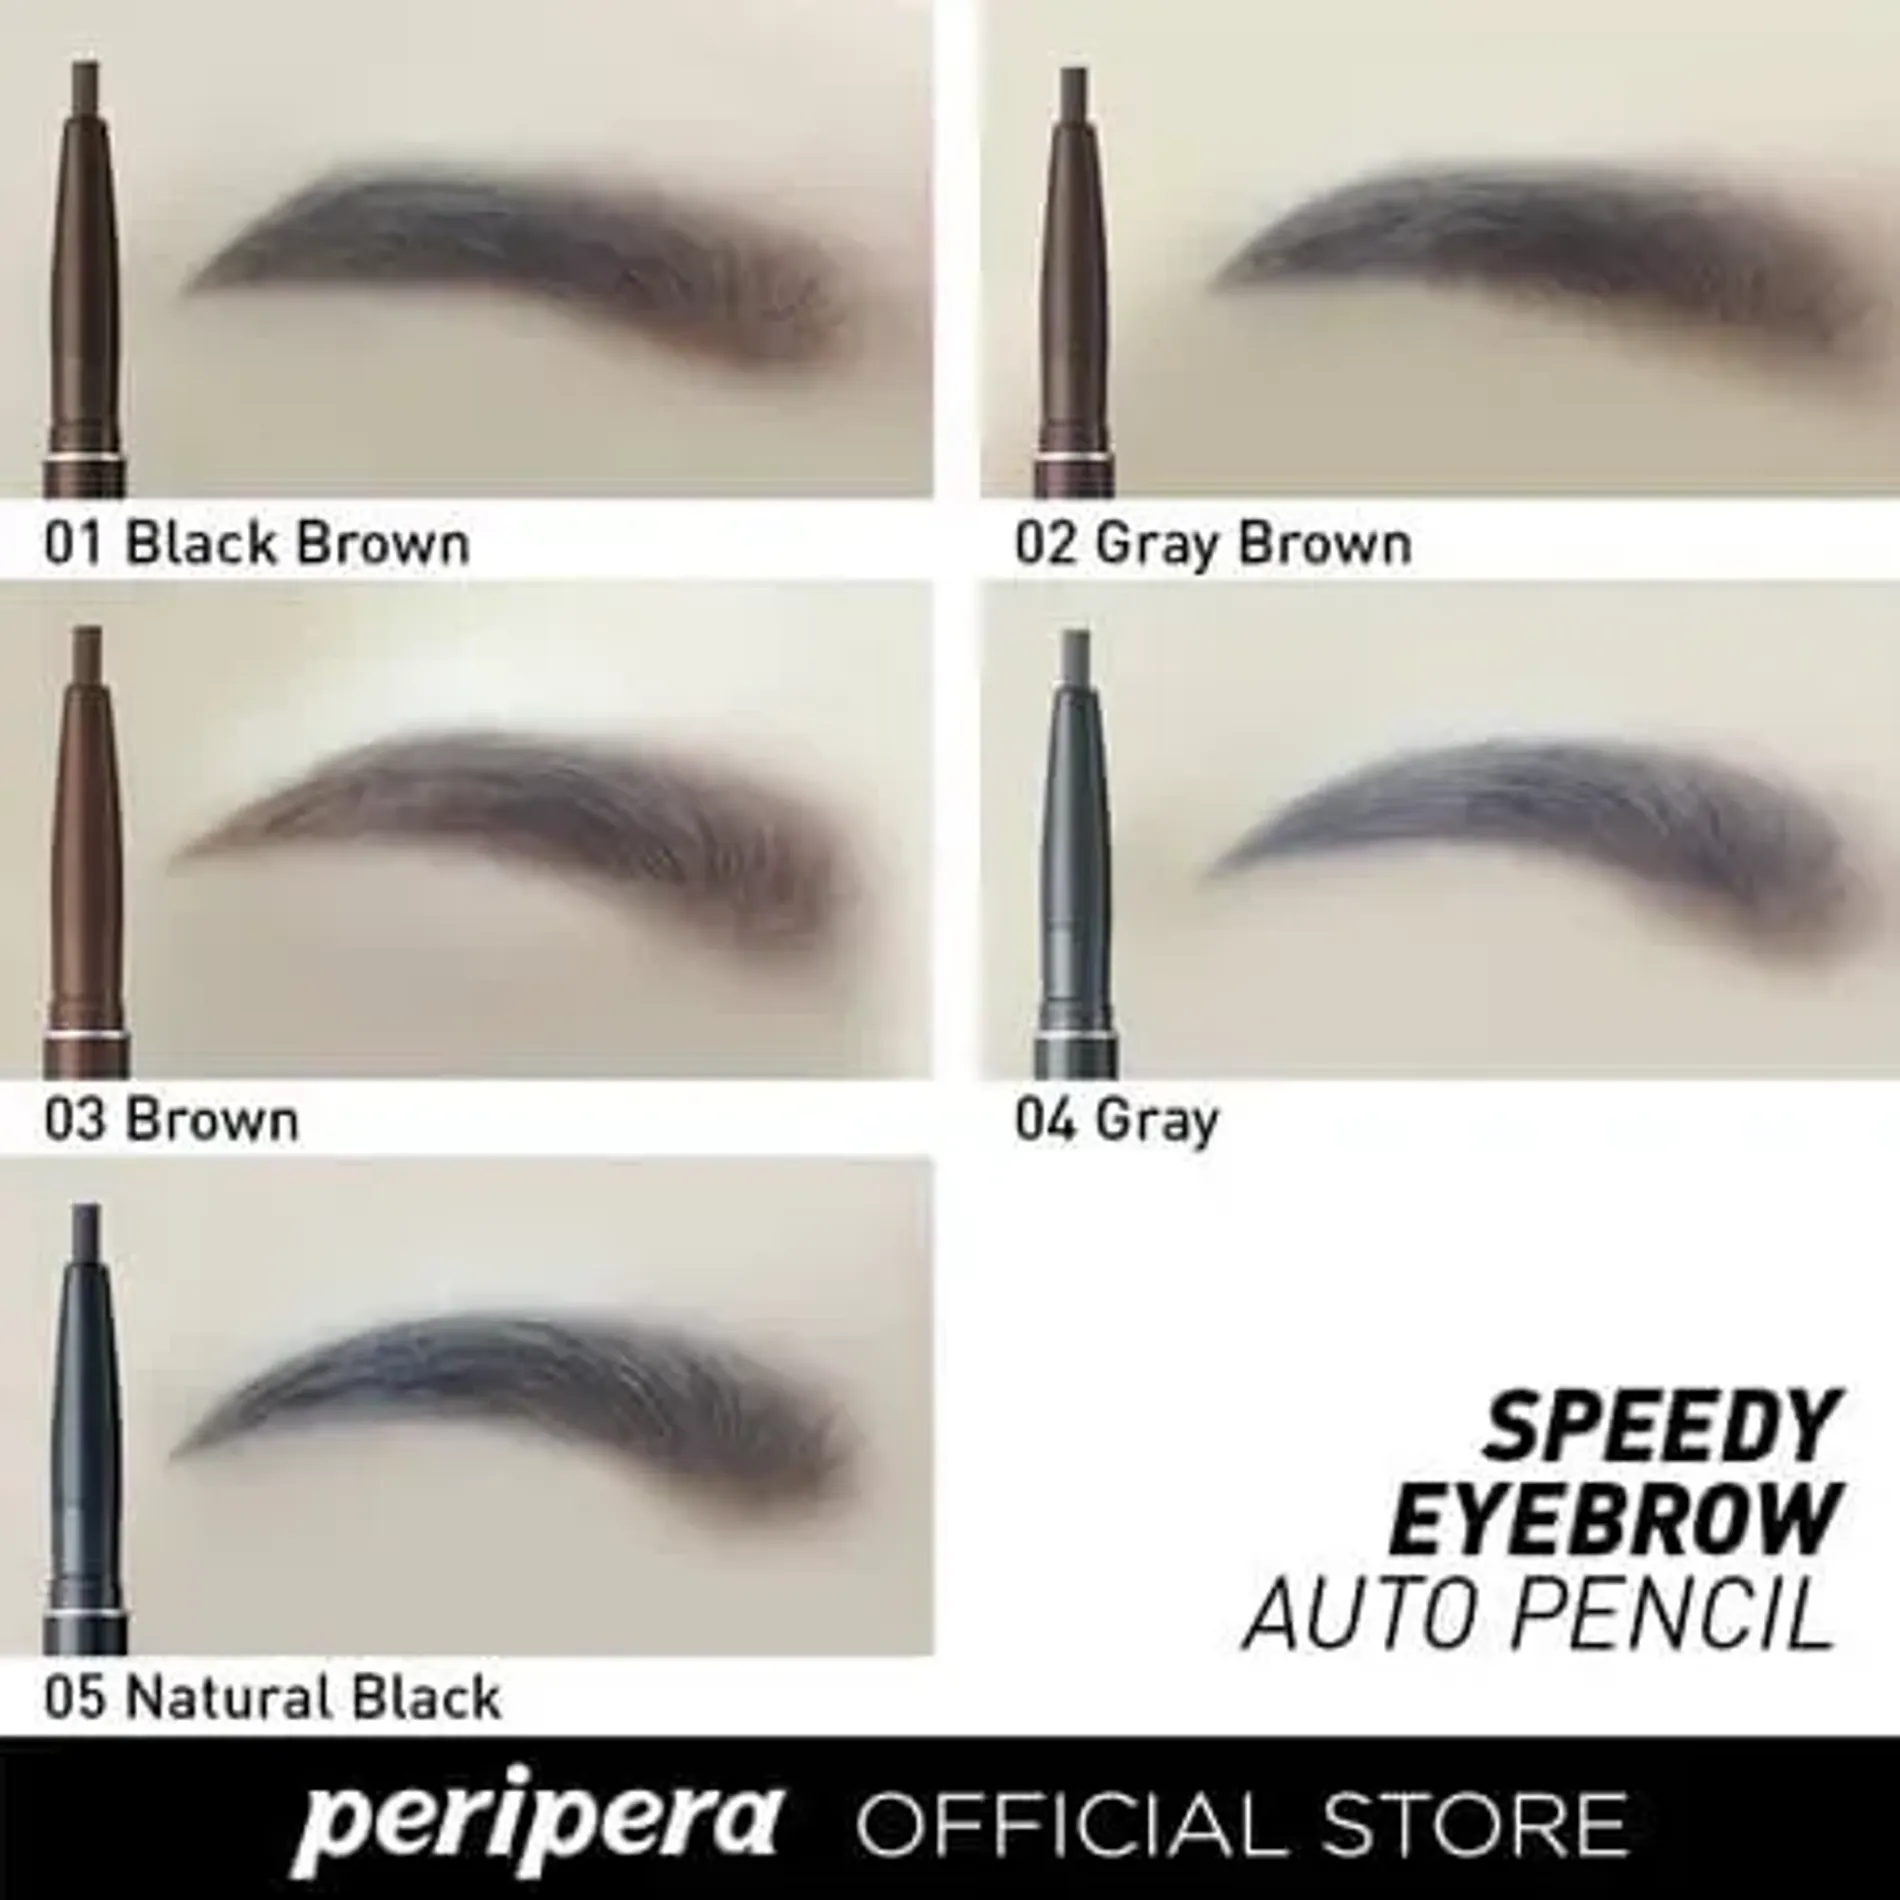 chi-chan-may-perifera-speedy-eyebrow-auto-pencil-003-brown-2